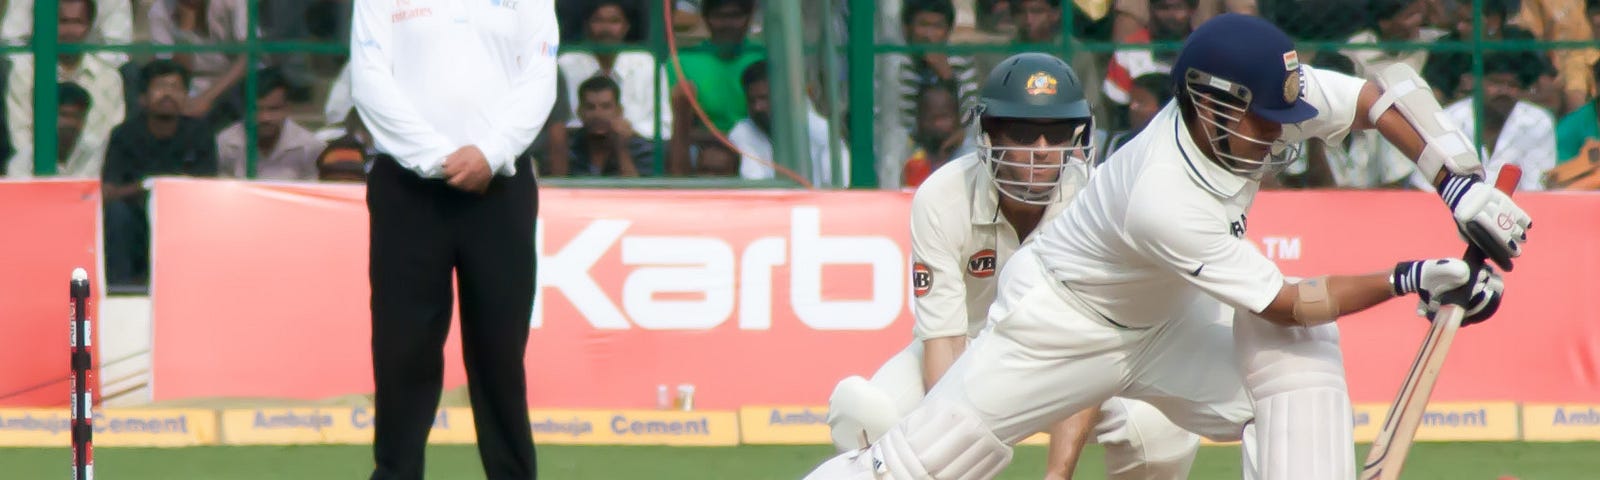 Sachin Tendulkar defending a ball in a test match against Australia